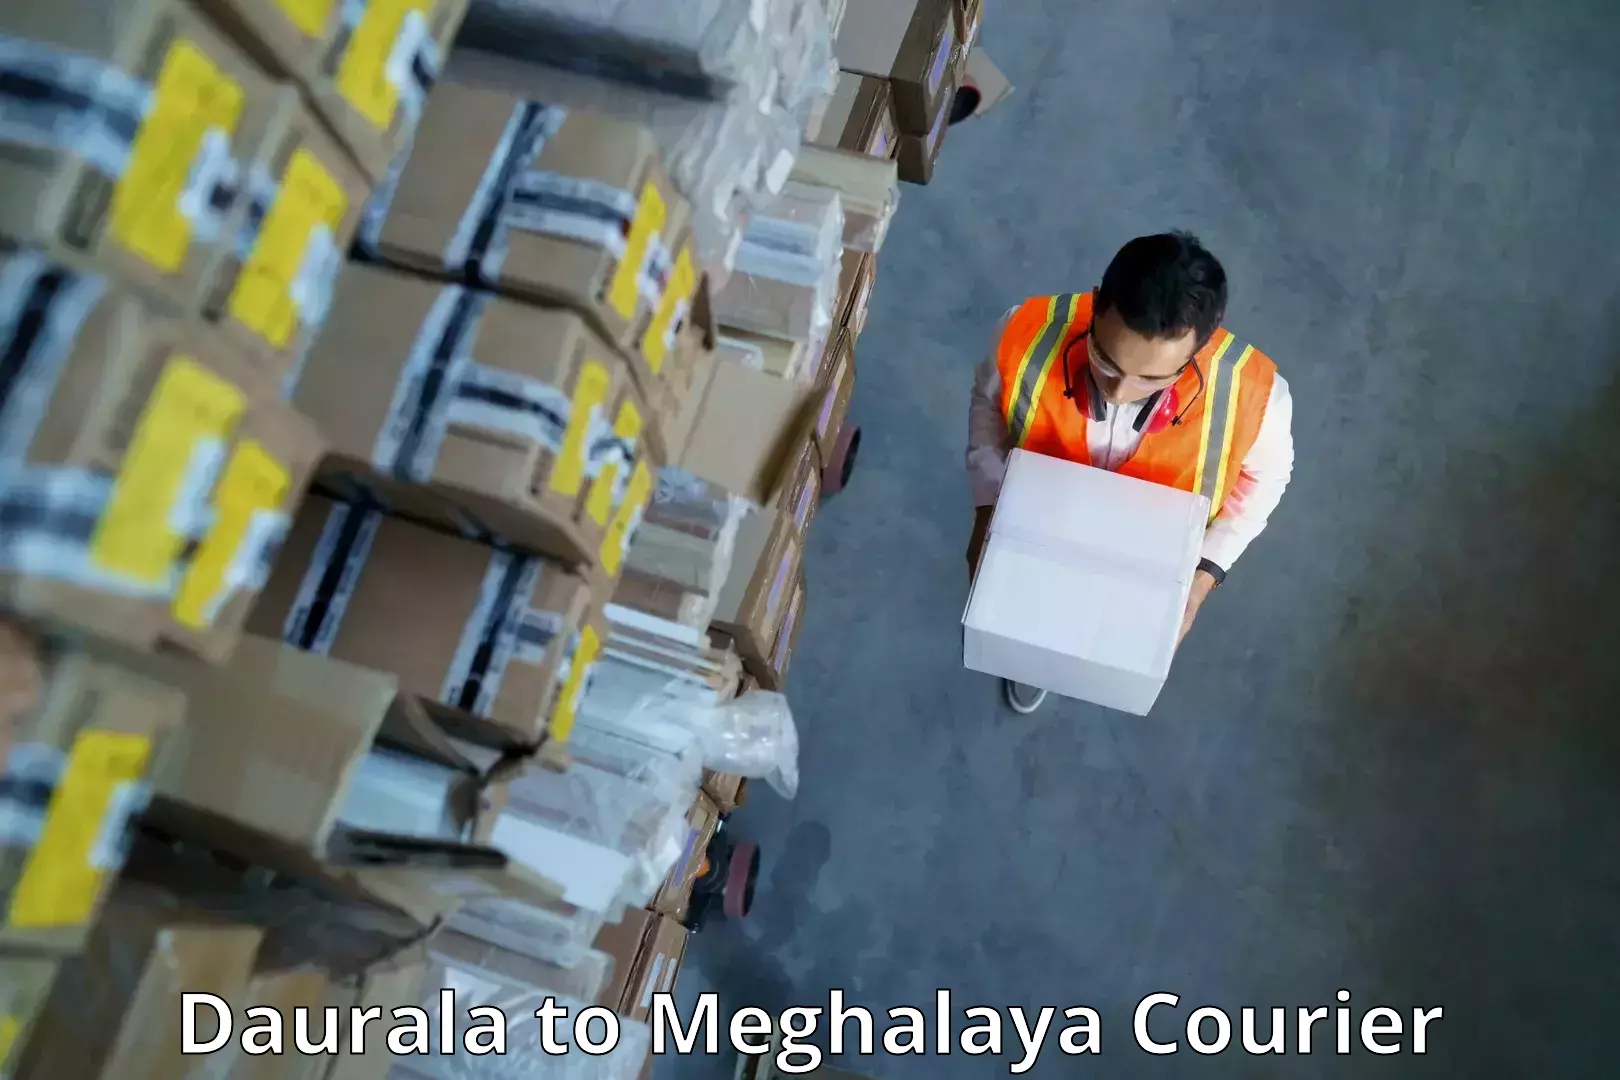 Courier service comparison Daurala to Shillong